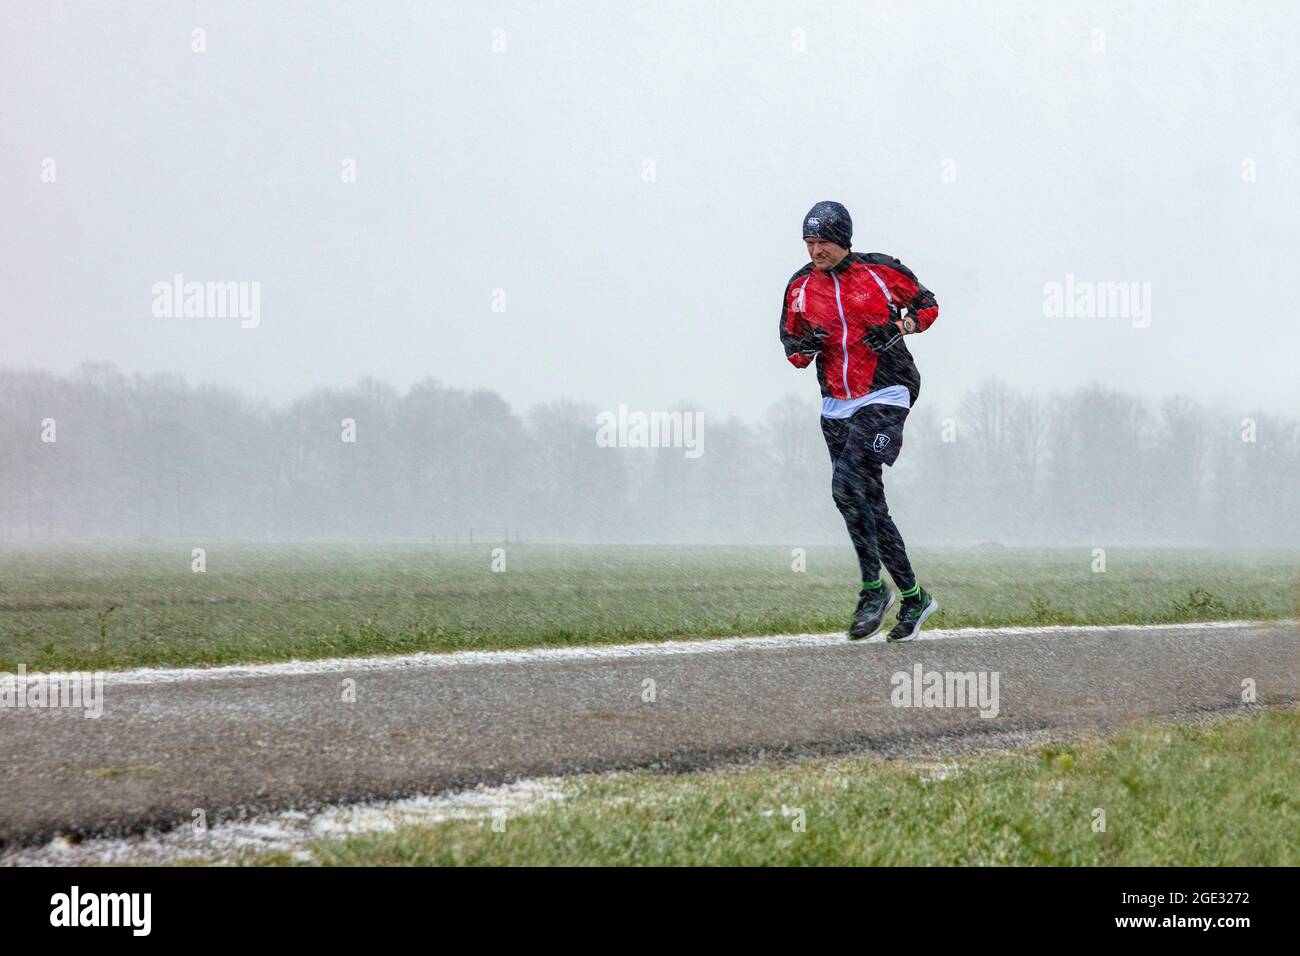 Holanda, Hilversum, Runner, jogger en tormenta de nieve. Invierno. Foto de stock